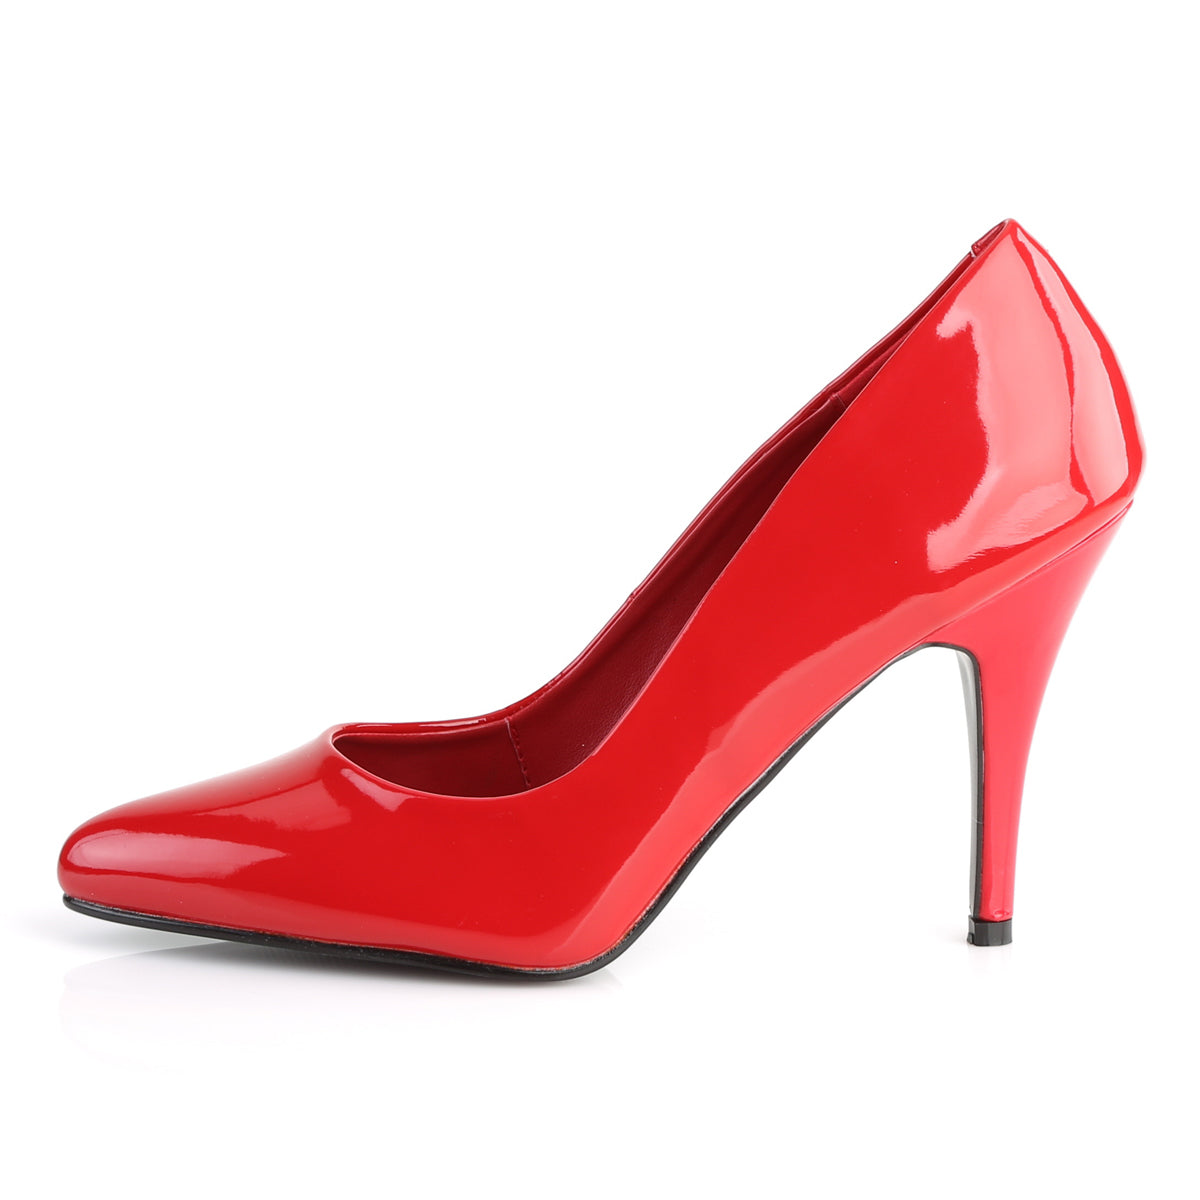 VANITY-420 Pleaser Shoes 4 Inch Heel Red Fetish Footwear-Pleaser- Sexy Shoes Pole Dance Heels